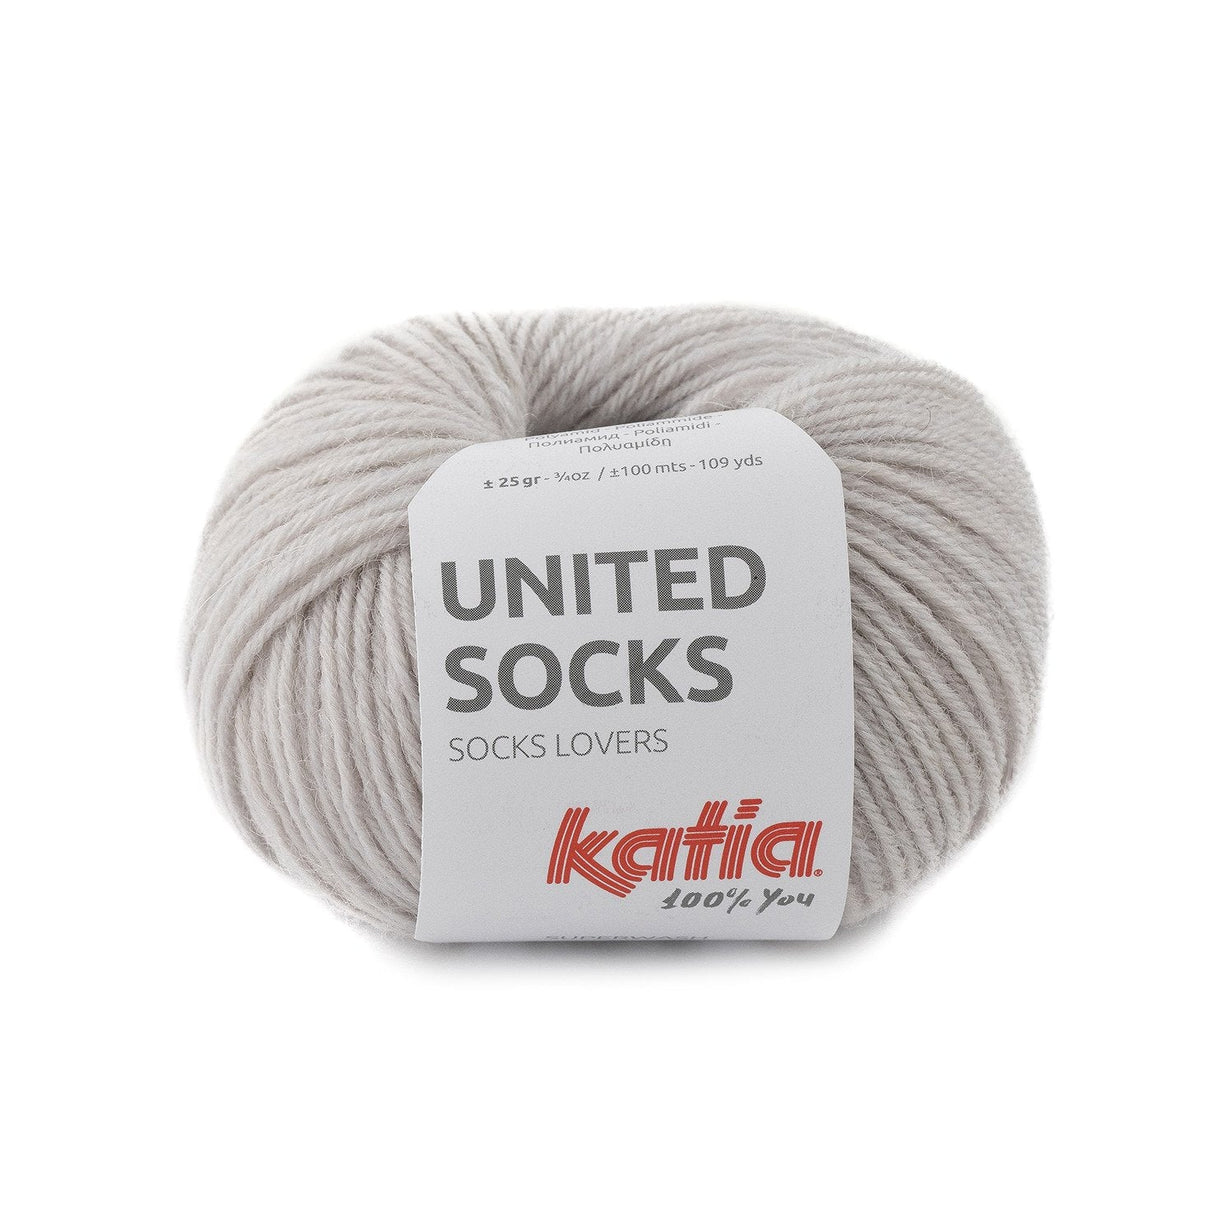 Katia United Socks - Lana para Tejer Calcetines de Calidad